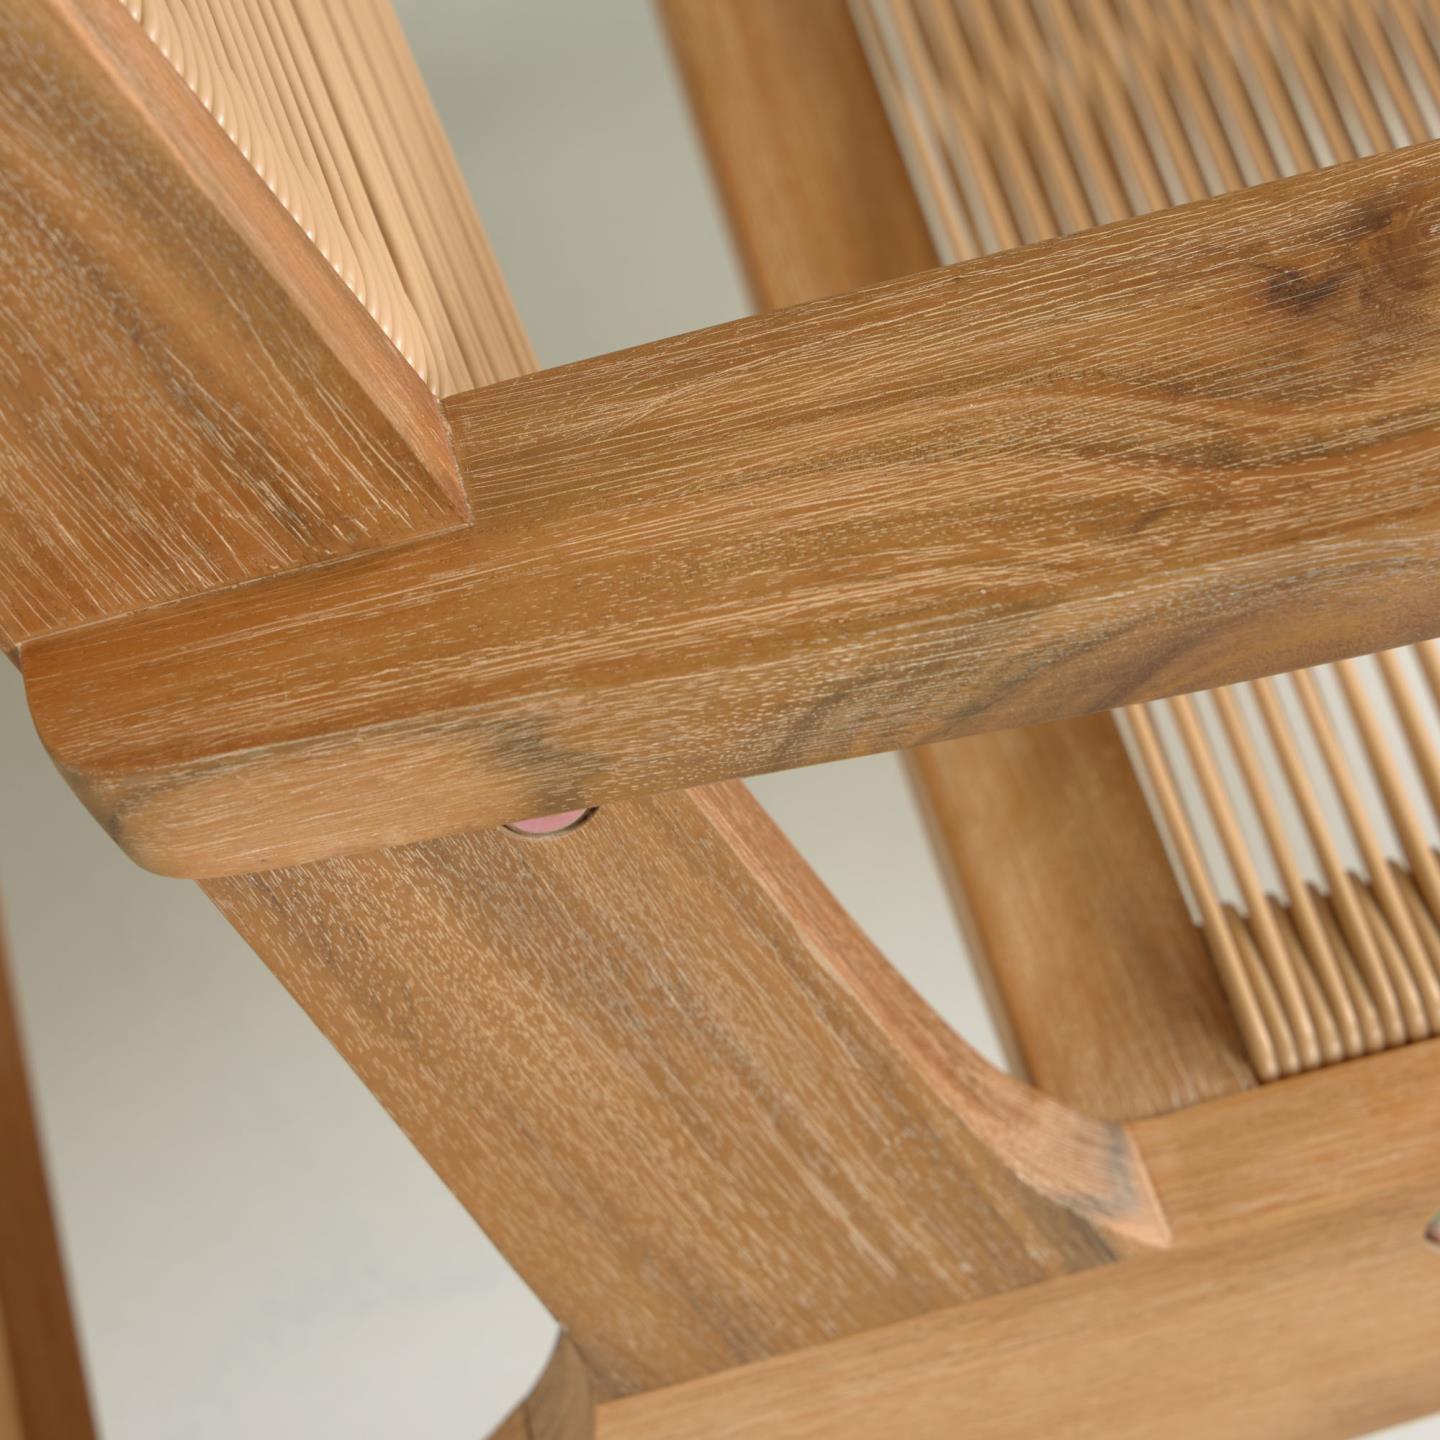 Geralda acacia wood armchair with natural finish FSC 100%